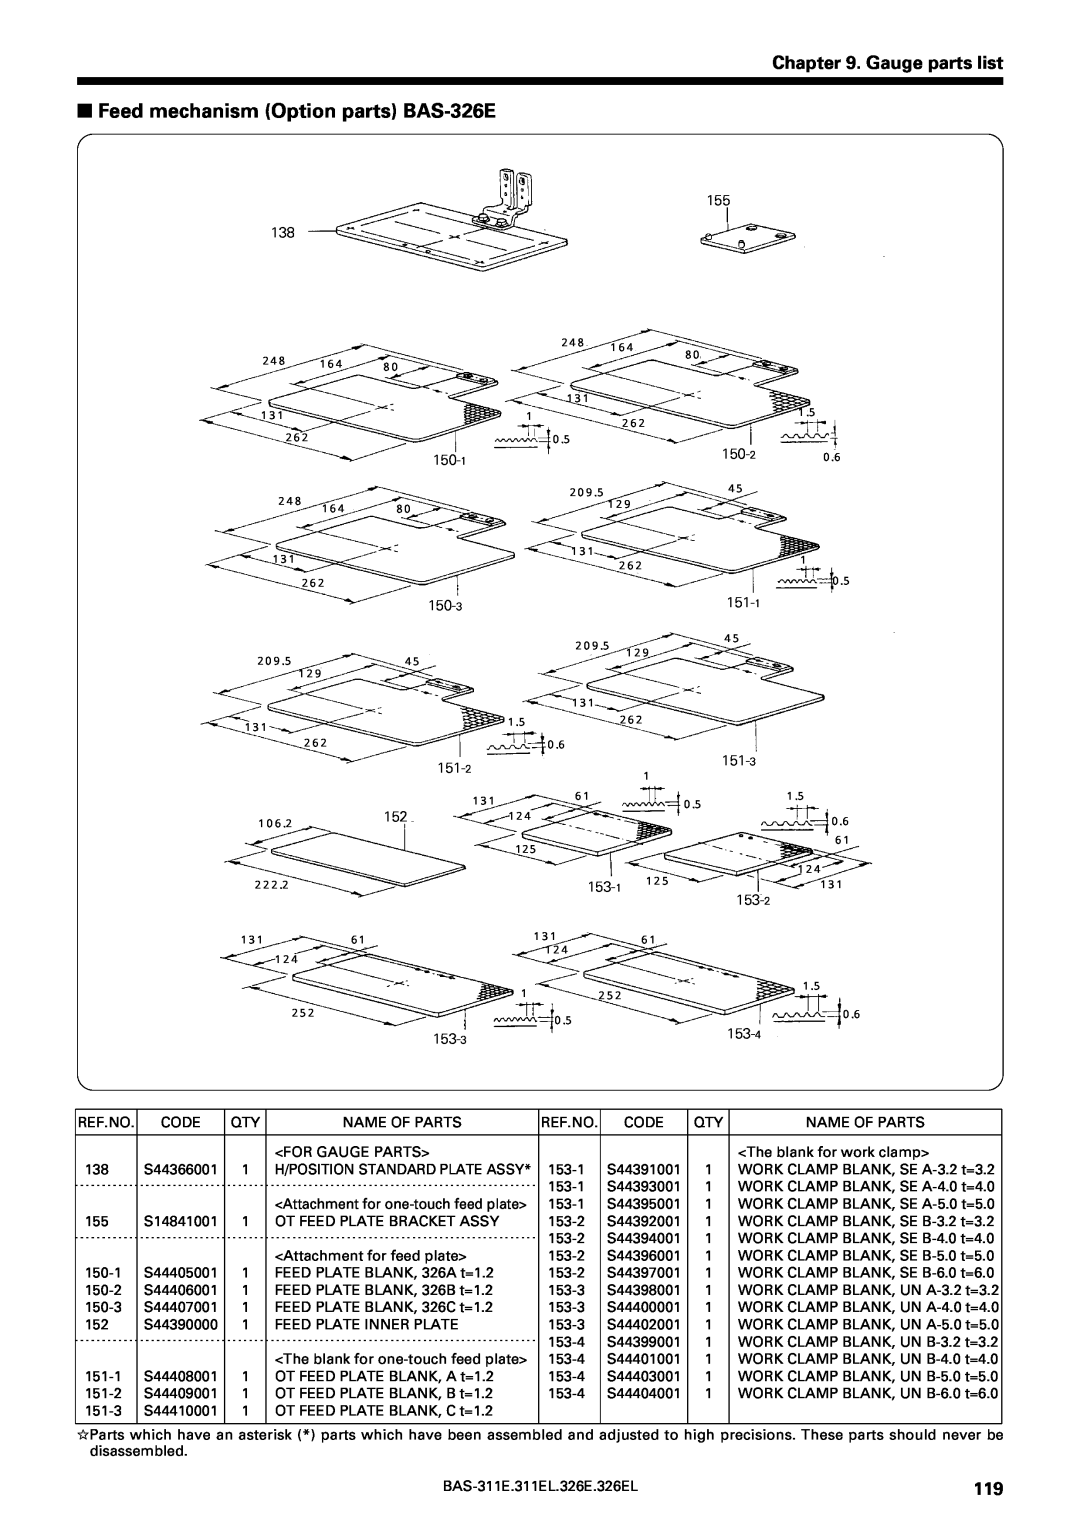 Brother BAS-311E service manual Feed mechanism Option parts BAS-326E, Gauge parts list 